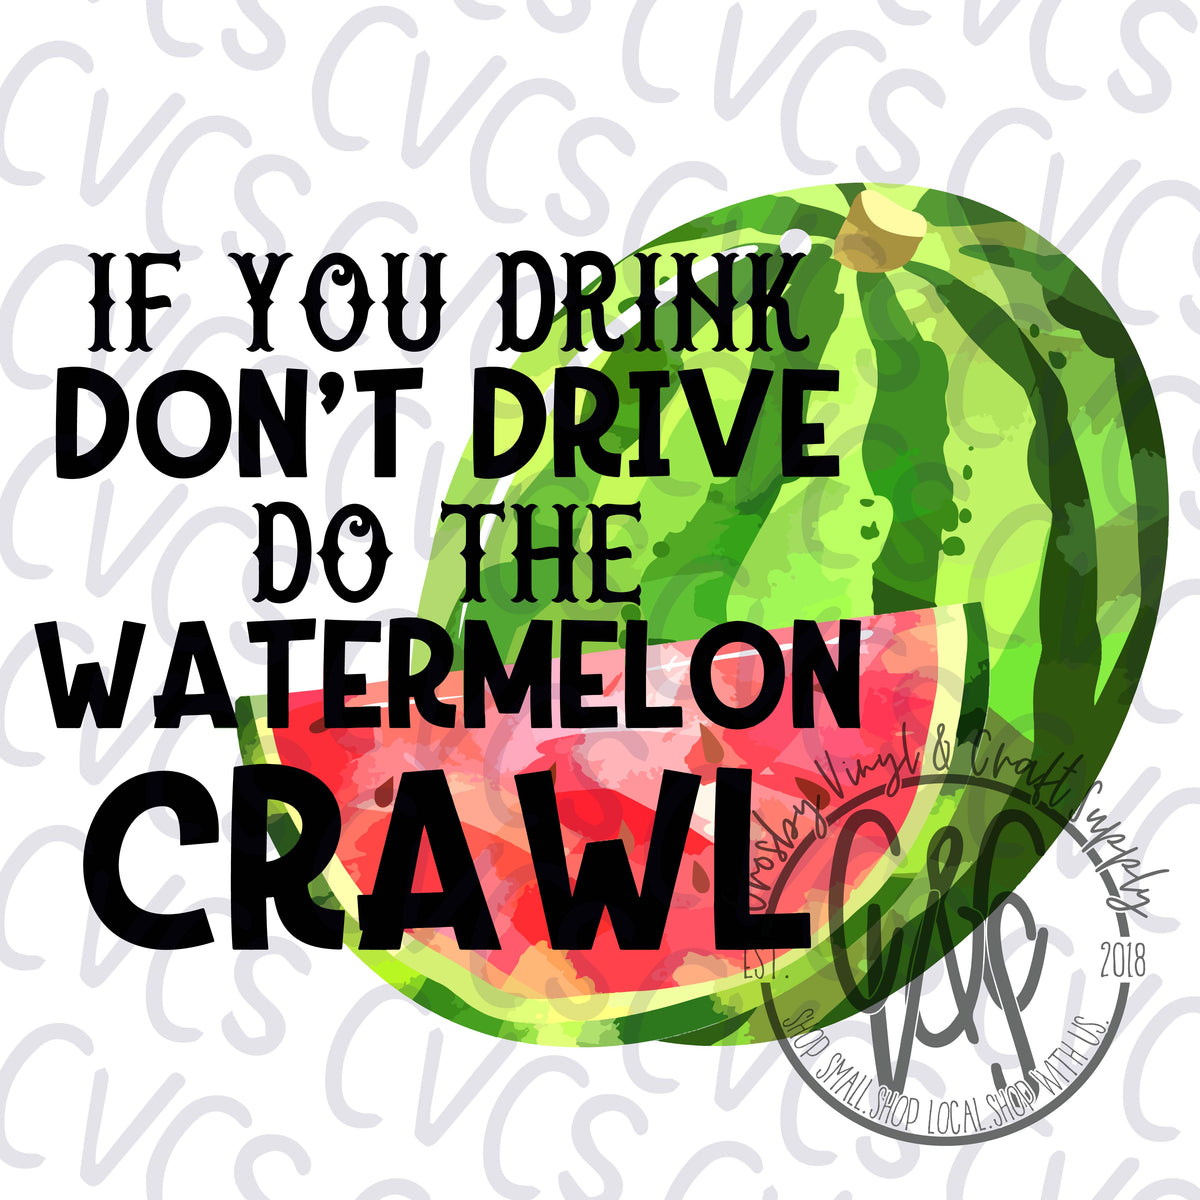 Do the watermelon crawl mp3 torrent